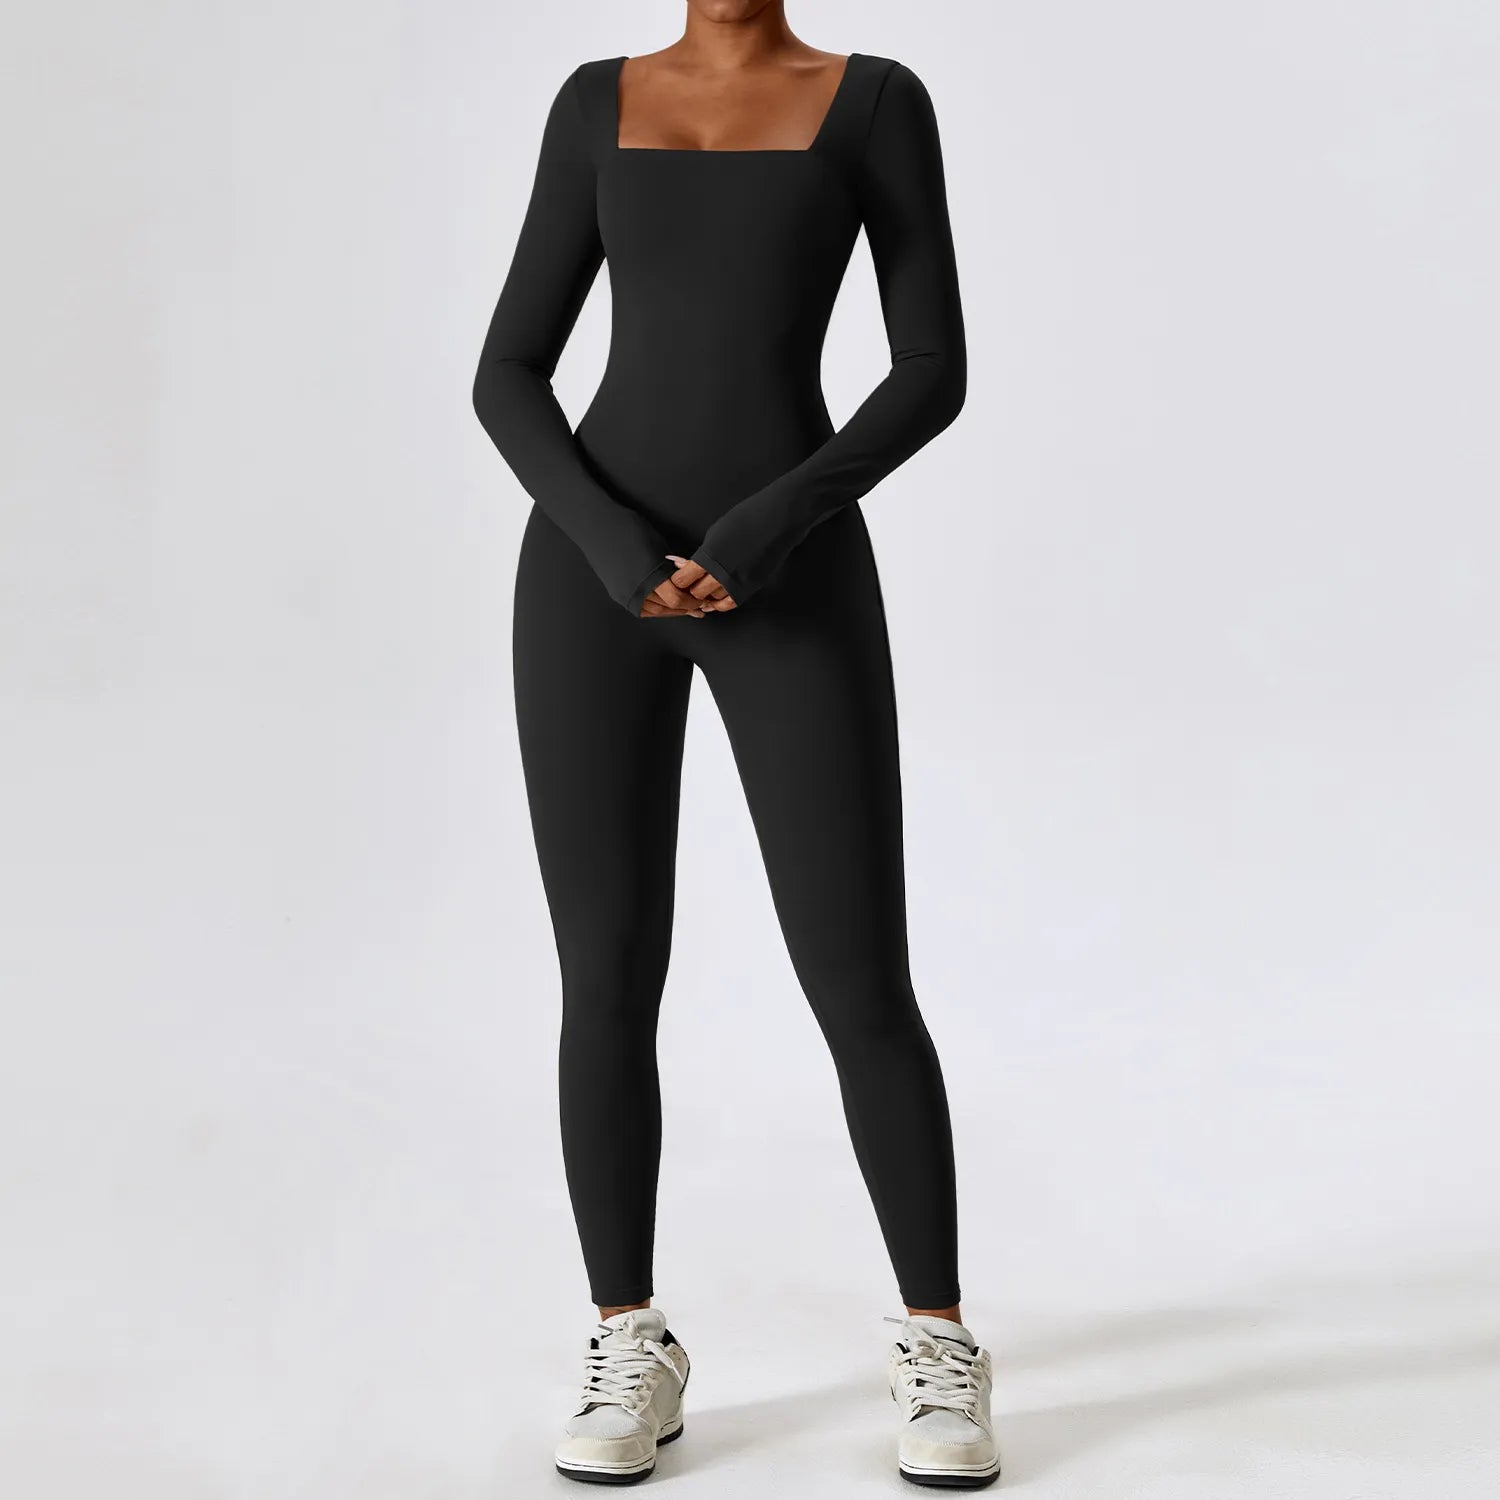 Jumpsuit-Gym-Workout-Yoga-Clothes-Dance-Fitness-Long-Sleeved-One-Piece-Sports-Jumpsuit-Sexy-Tight-Boilersuit_d8baef90-a368-4c5a-a9fc-81f44c4e5601.webp